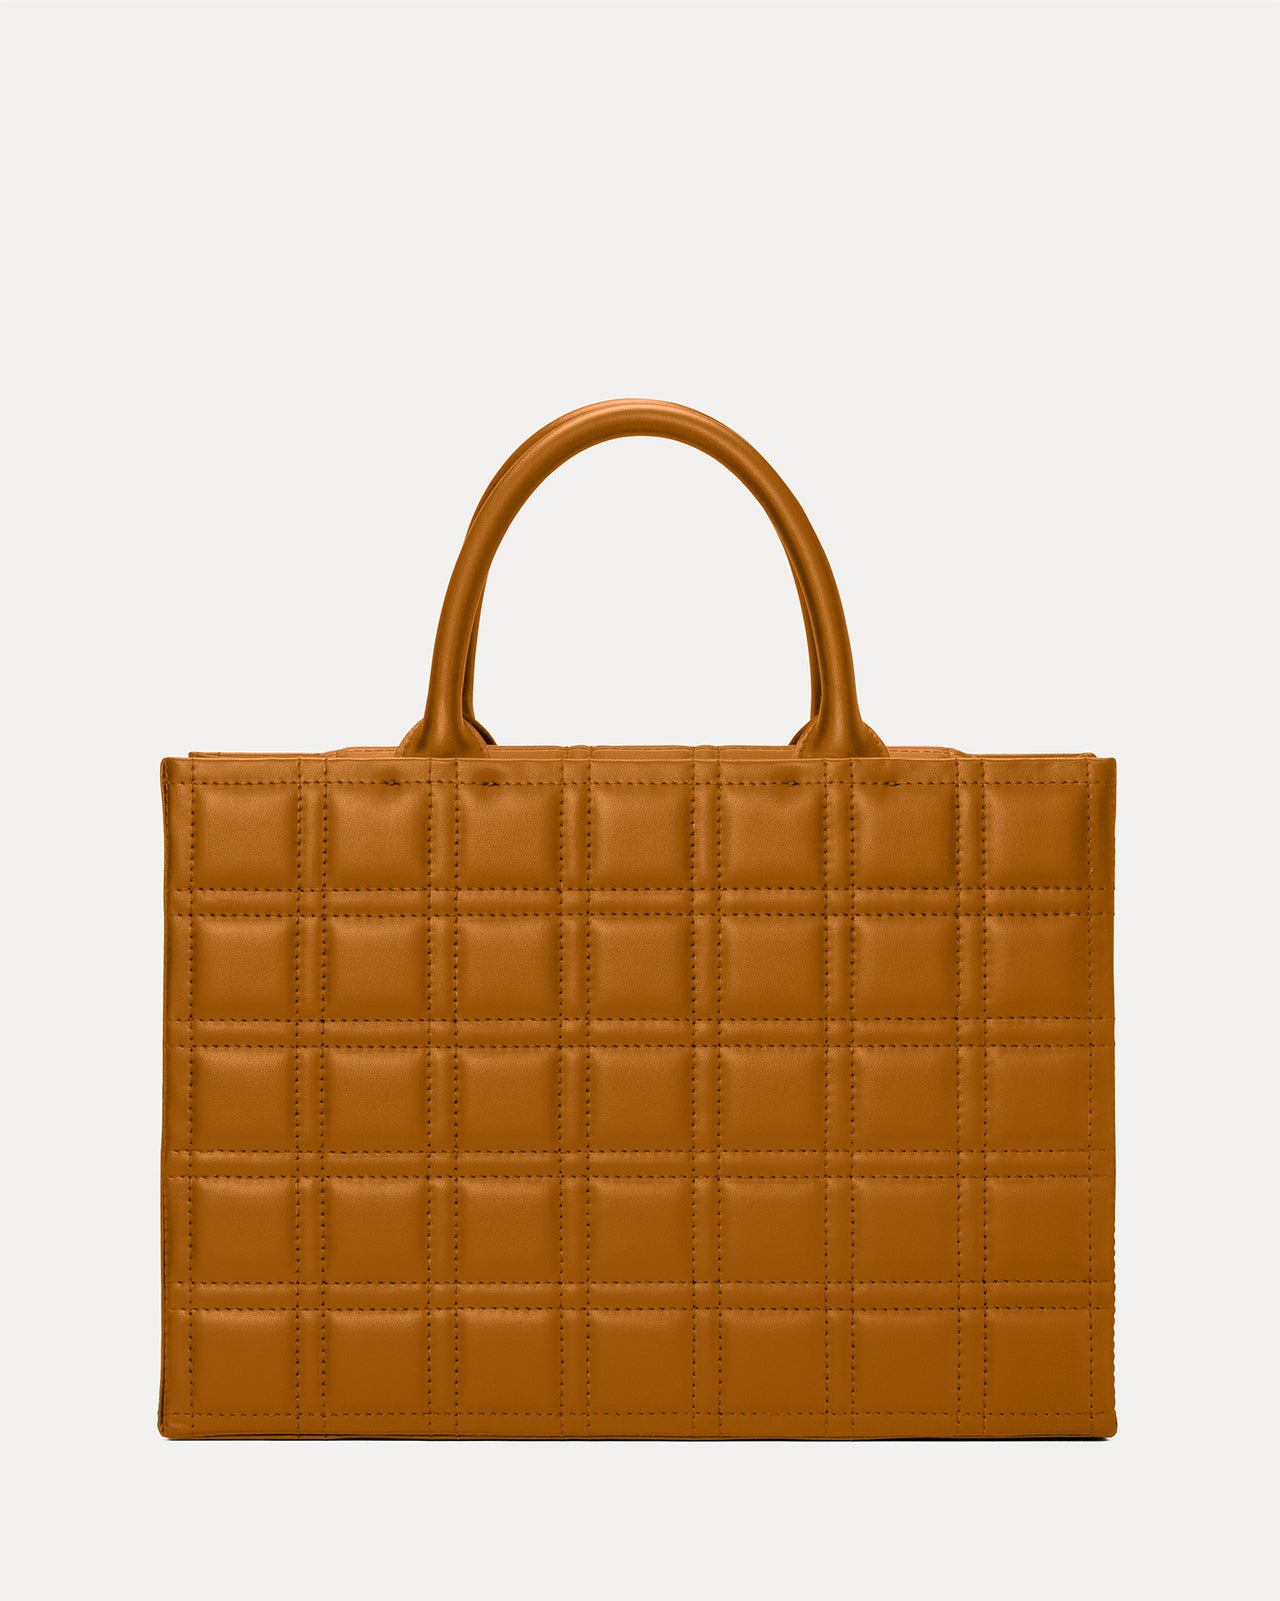 5x7 Bag in Brown